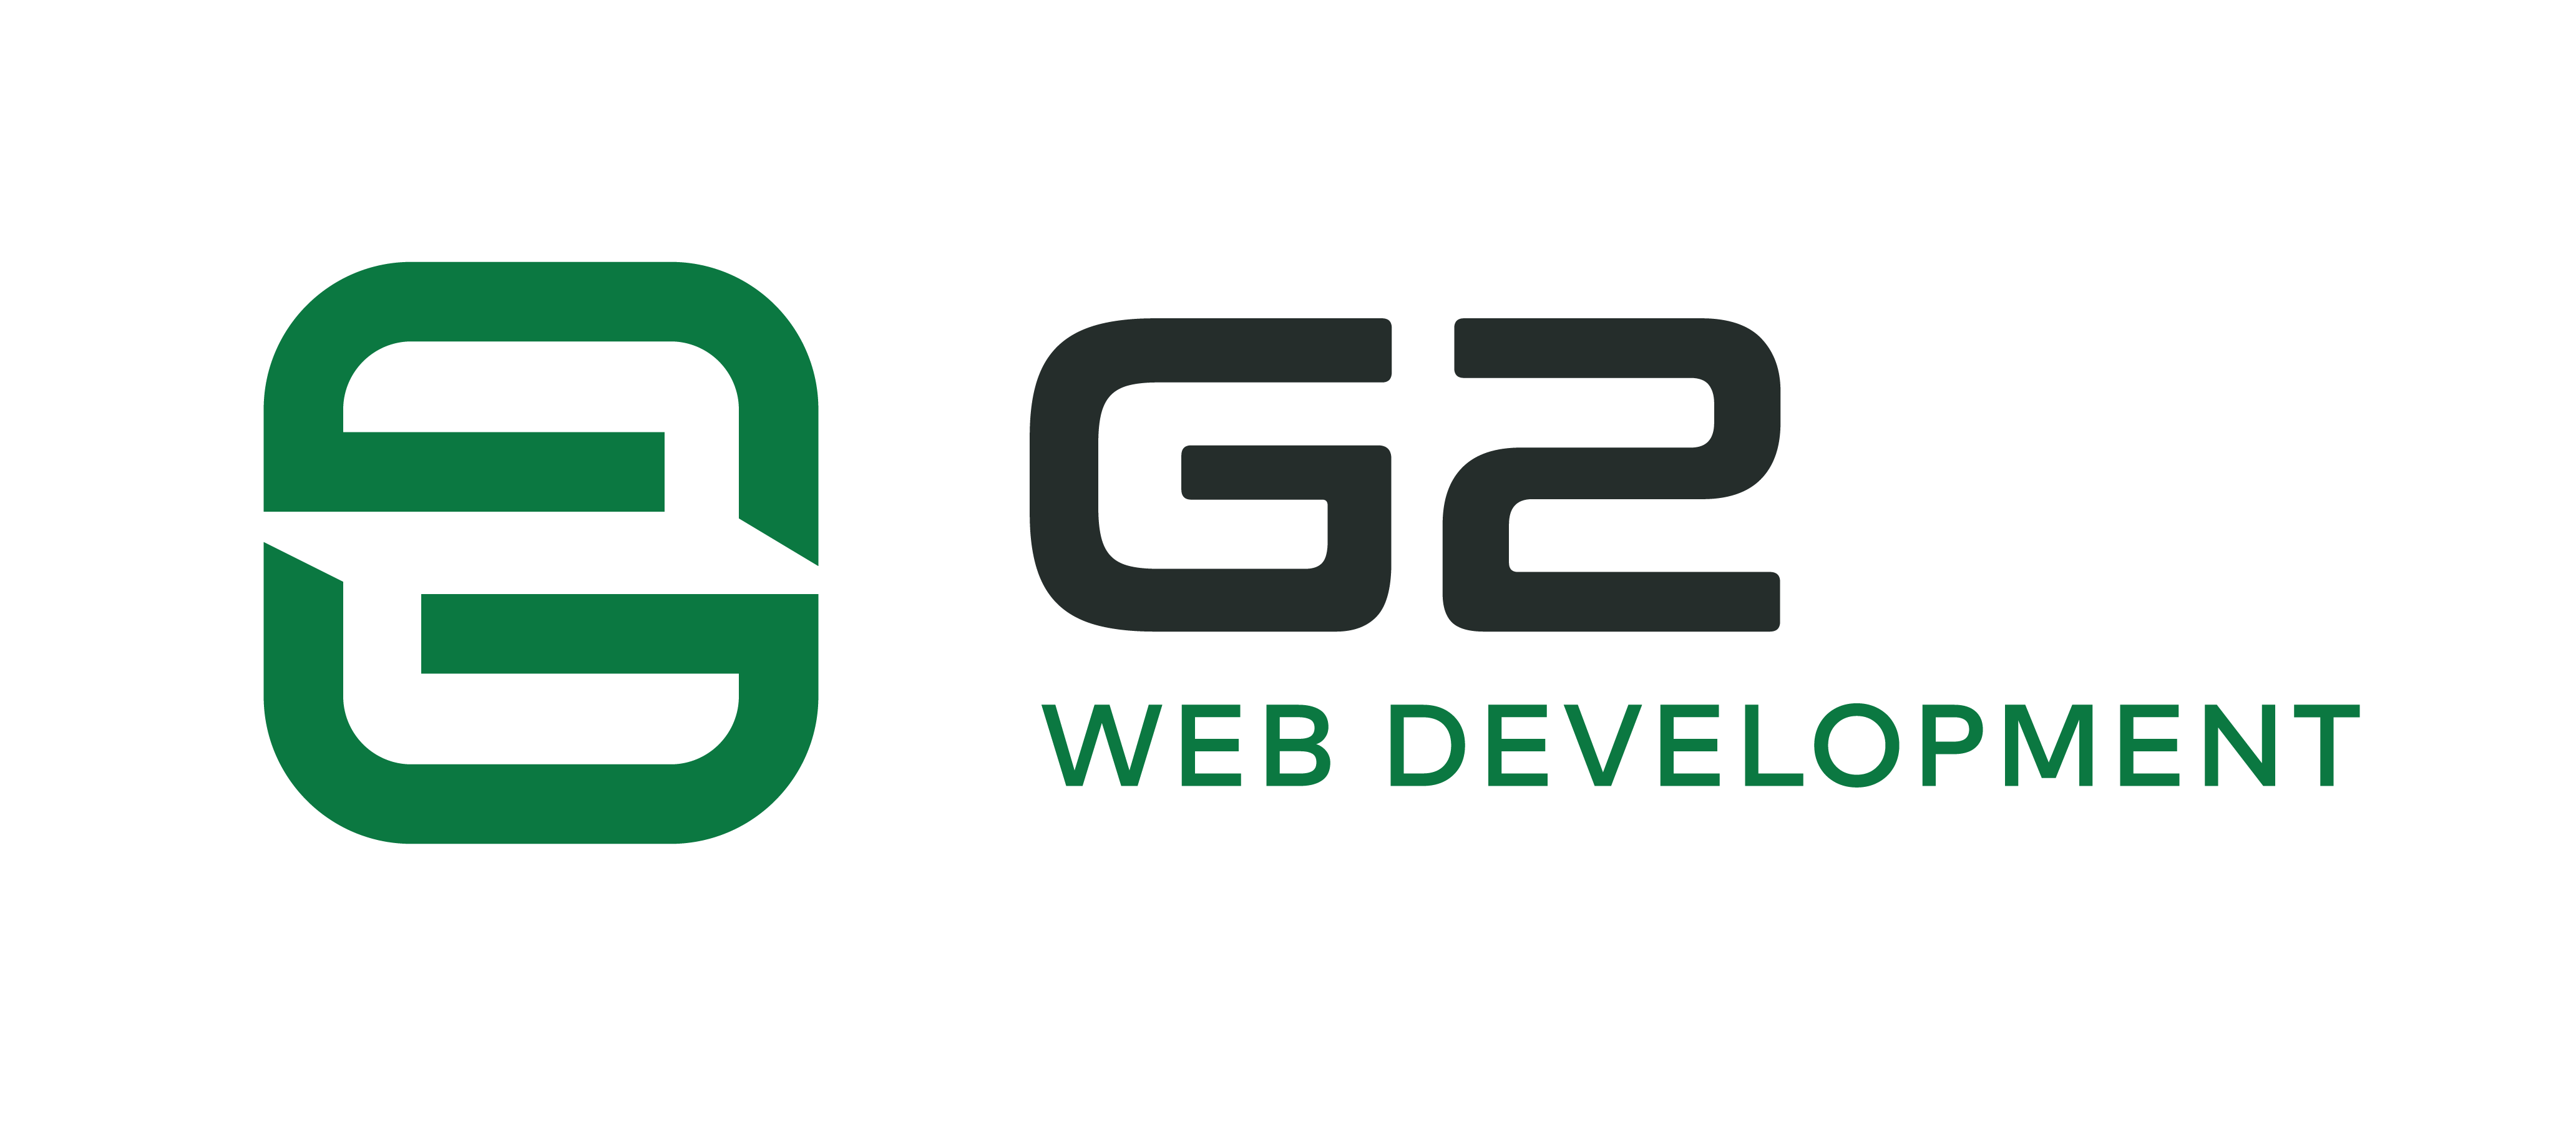 Best-In-Class Web Design & Development Services | Elite Digital Agency